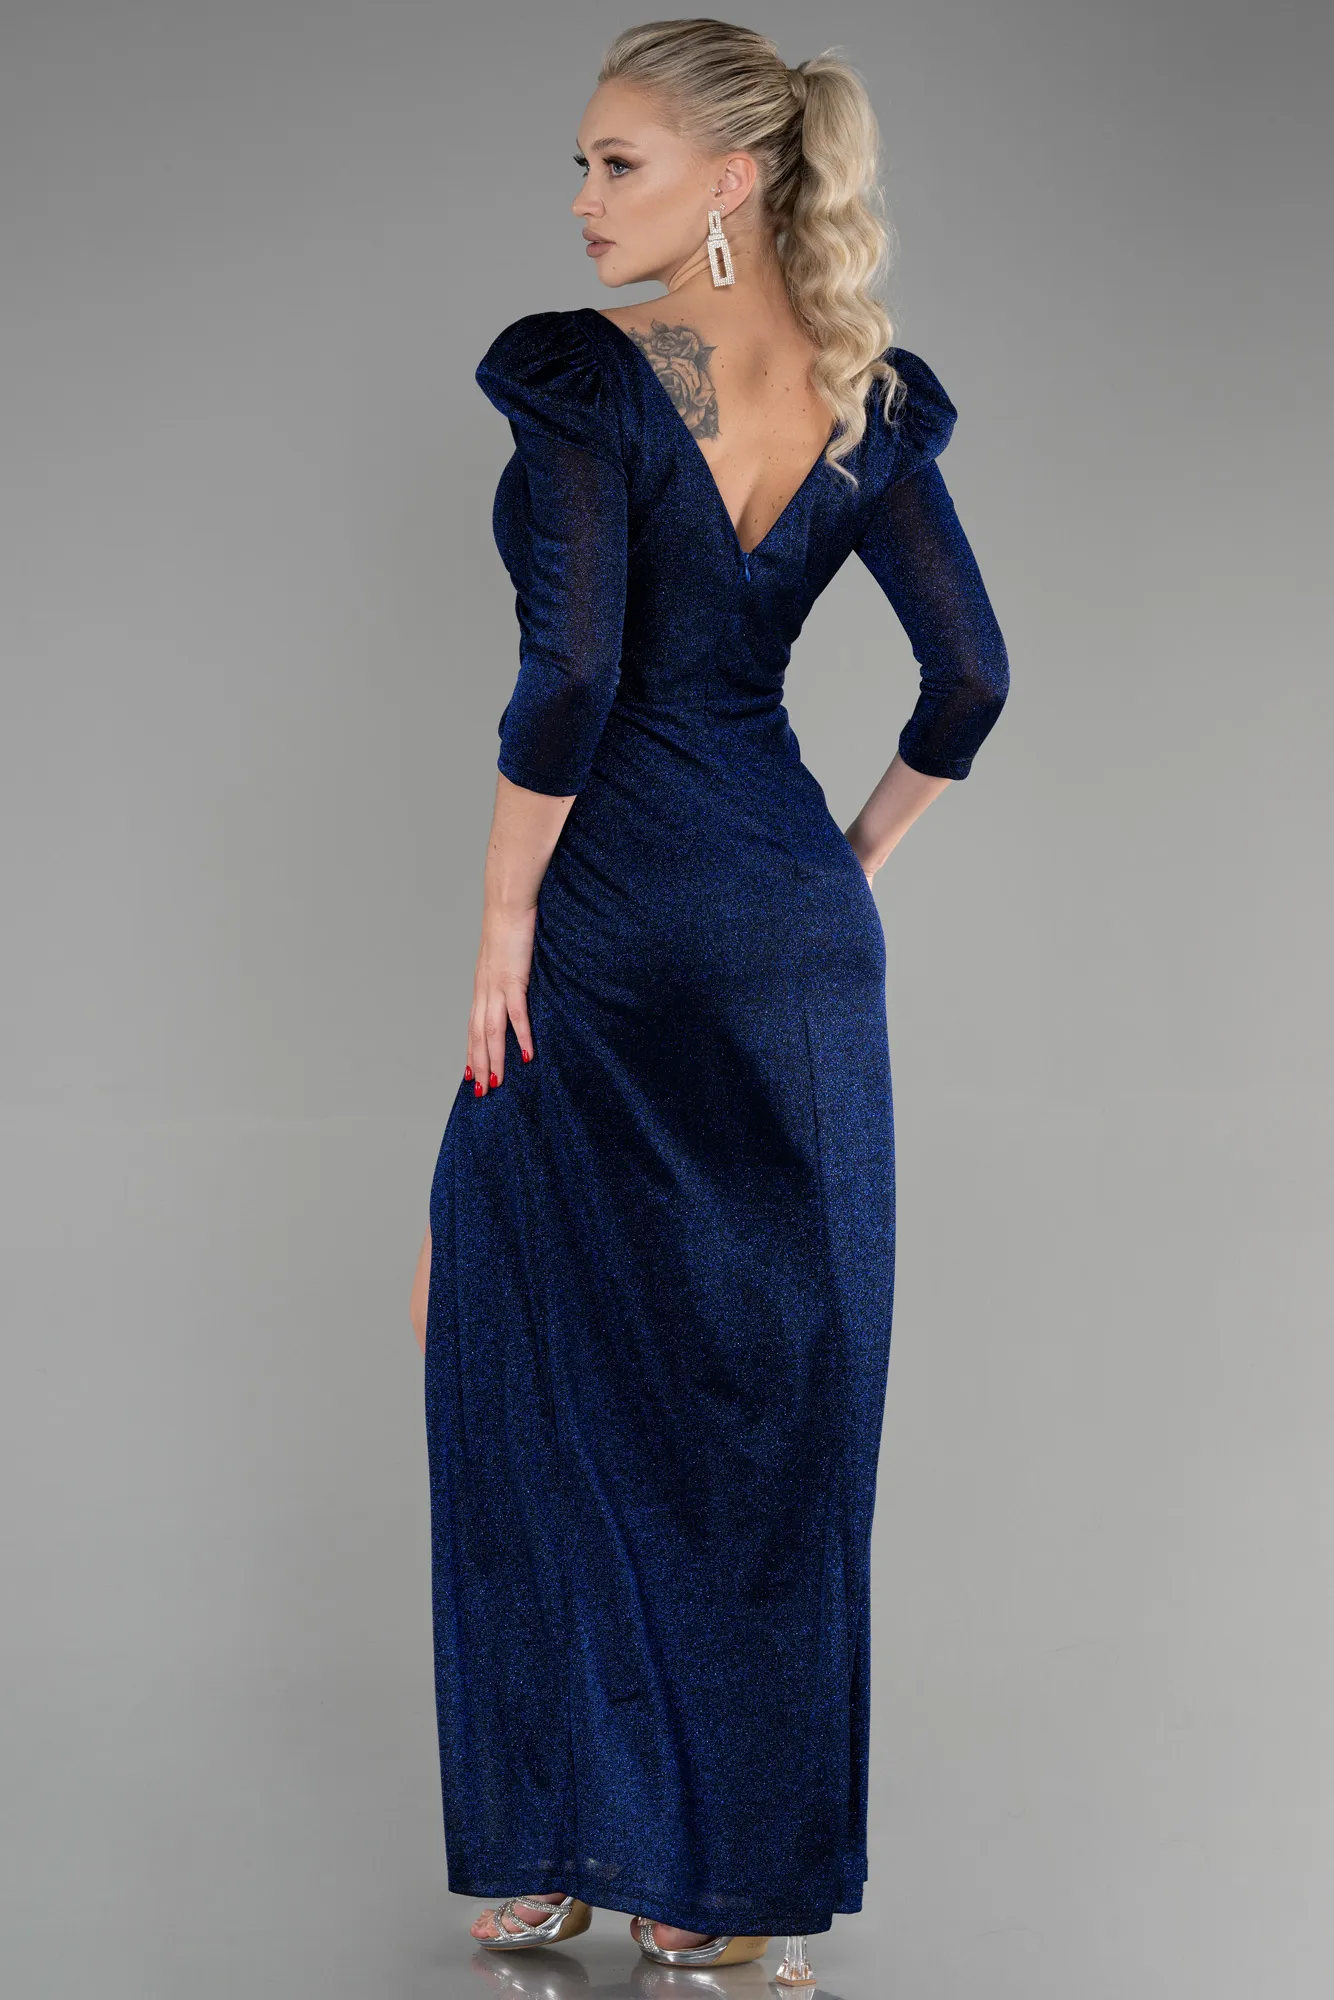 Sax Blue-Long Evening Dress ABU3445